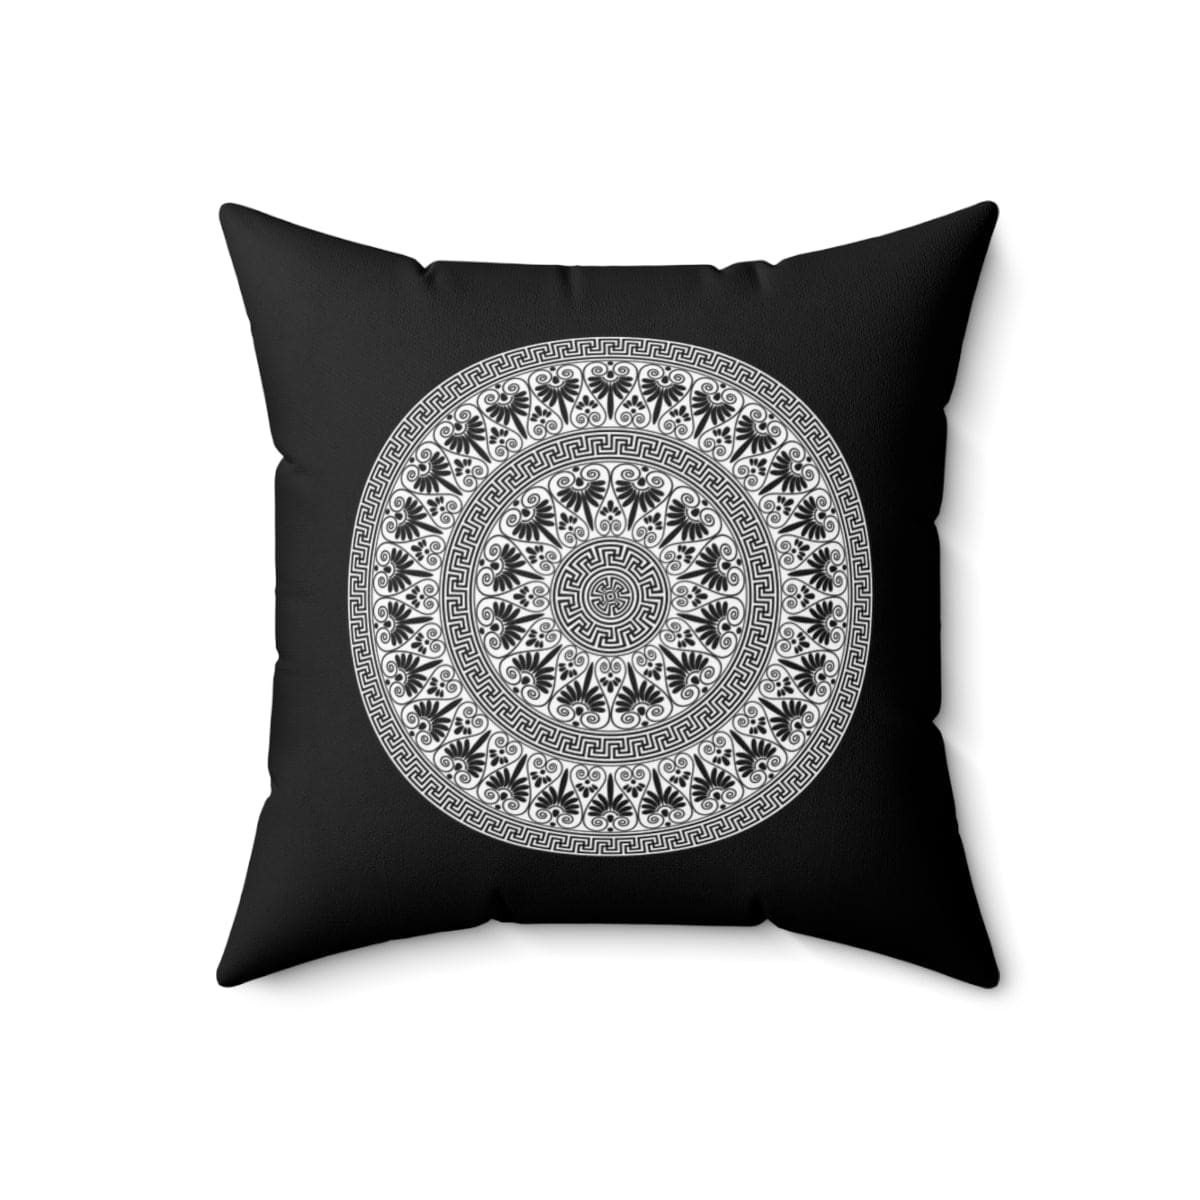 Decorative Throw Pillow Case Black And White Round Geometric Boho Pattern -